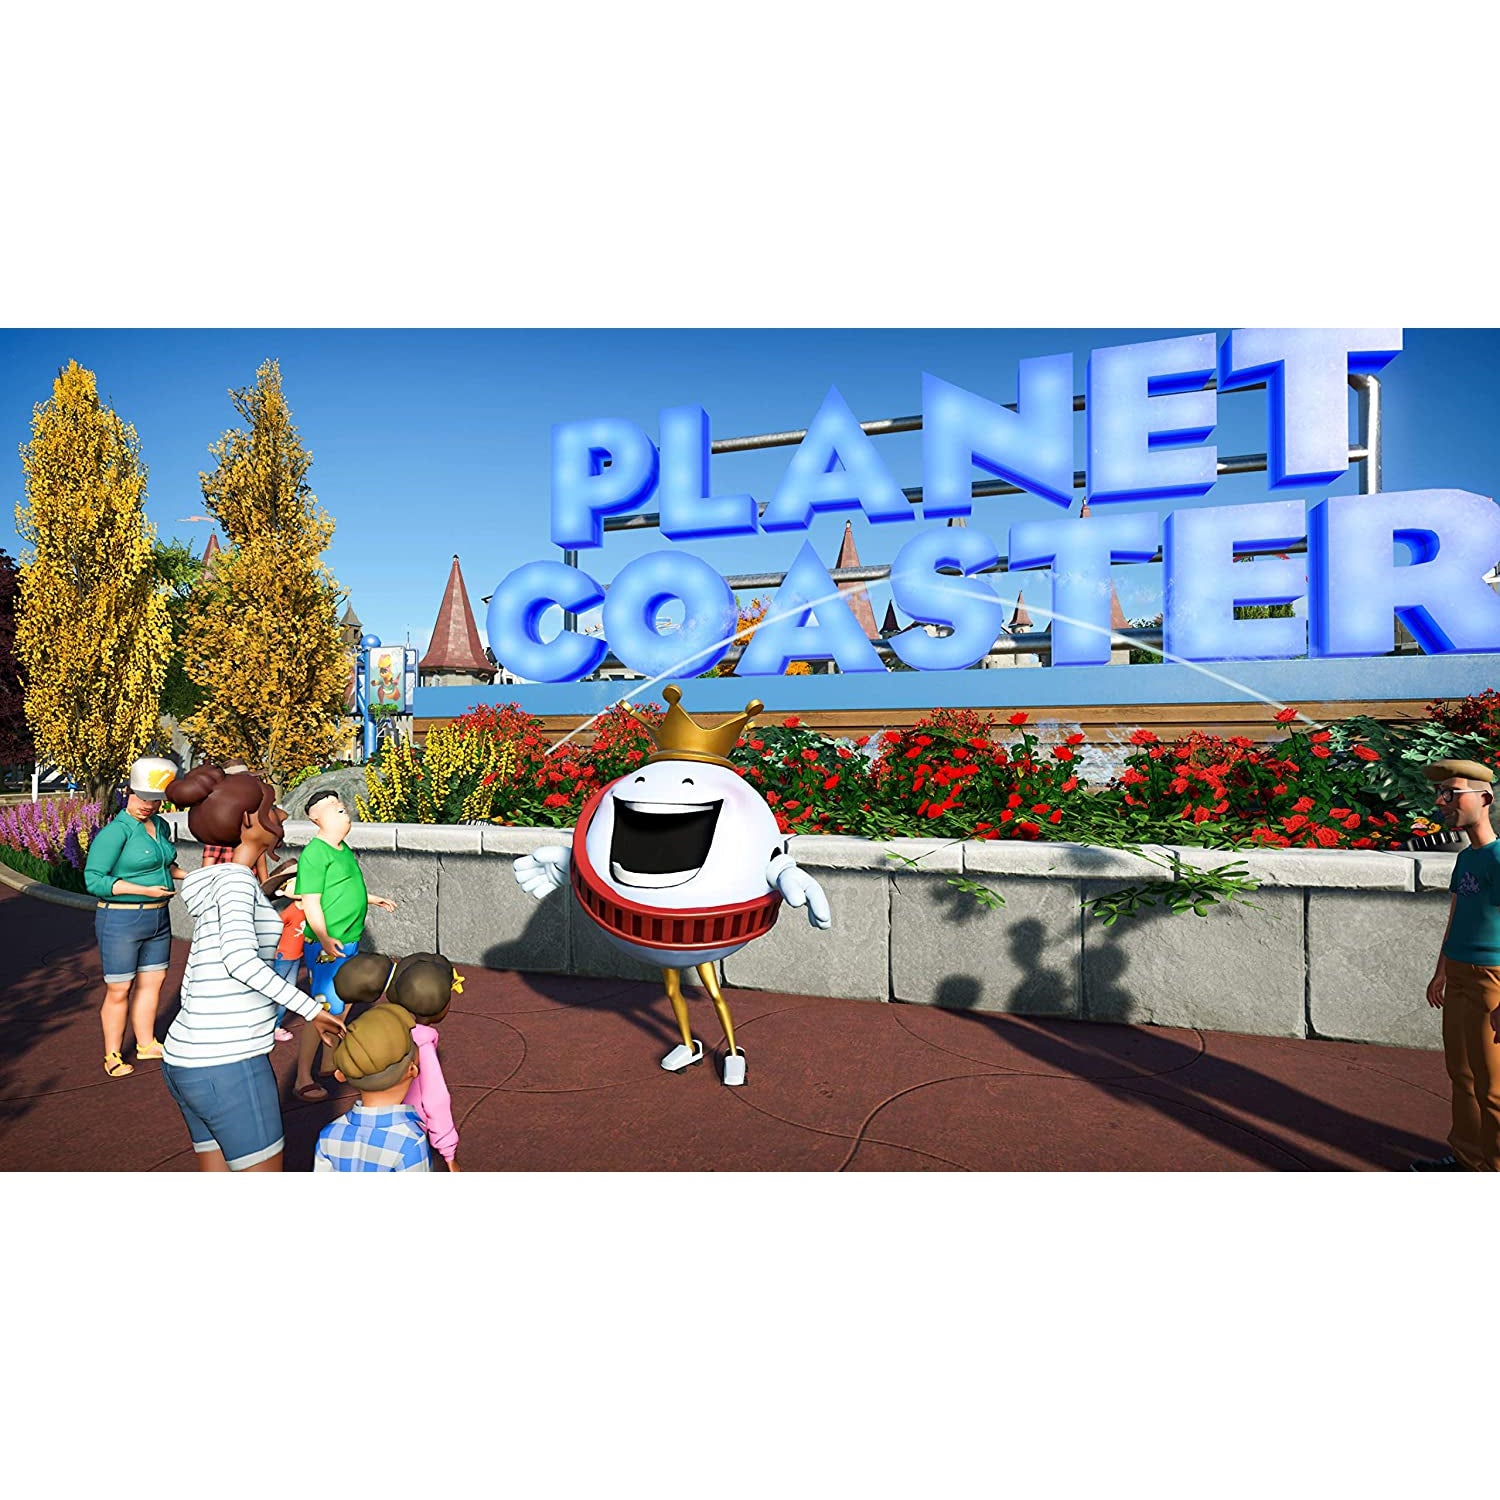 Planet Coaster: Console Edition (Xbox)